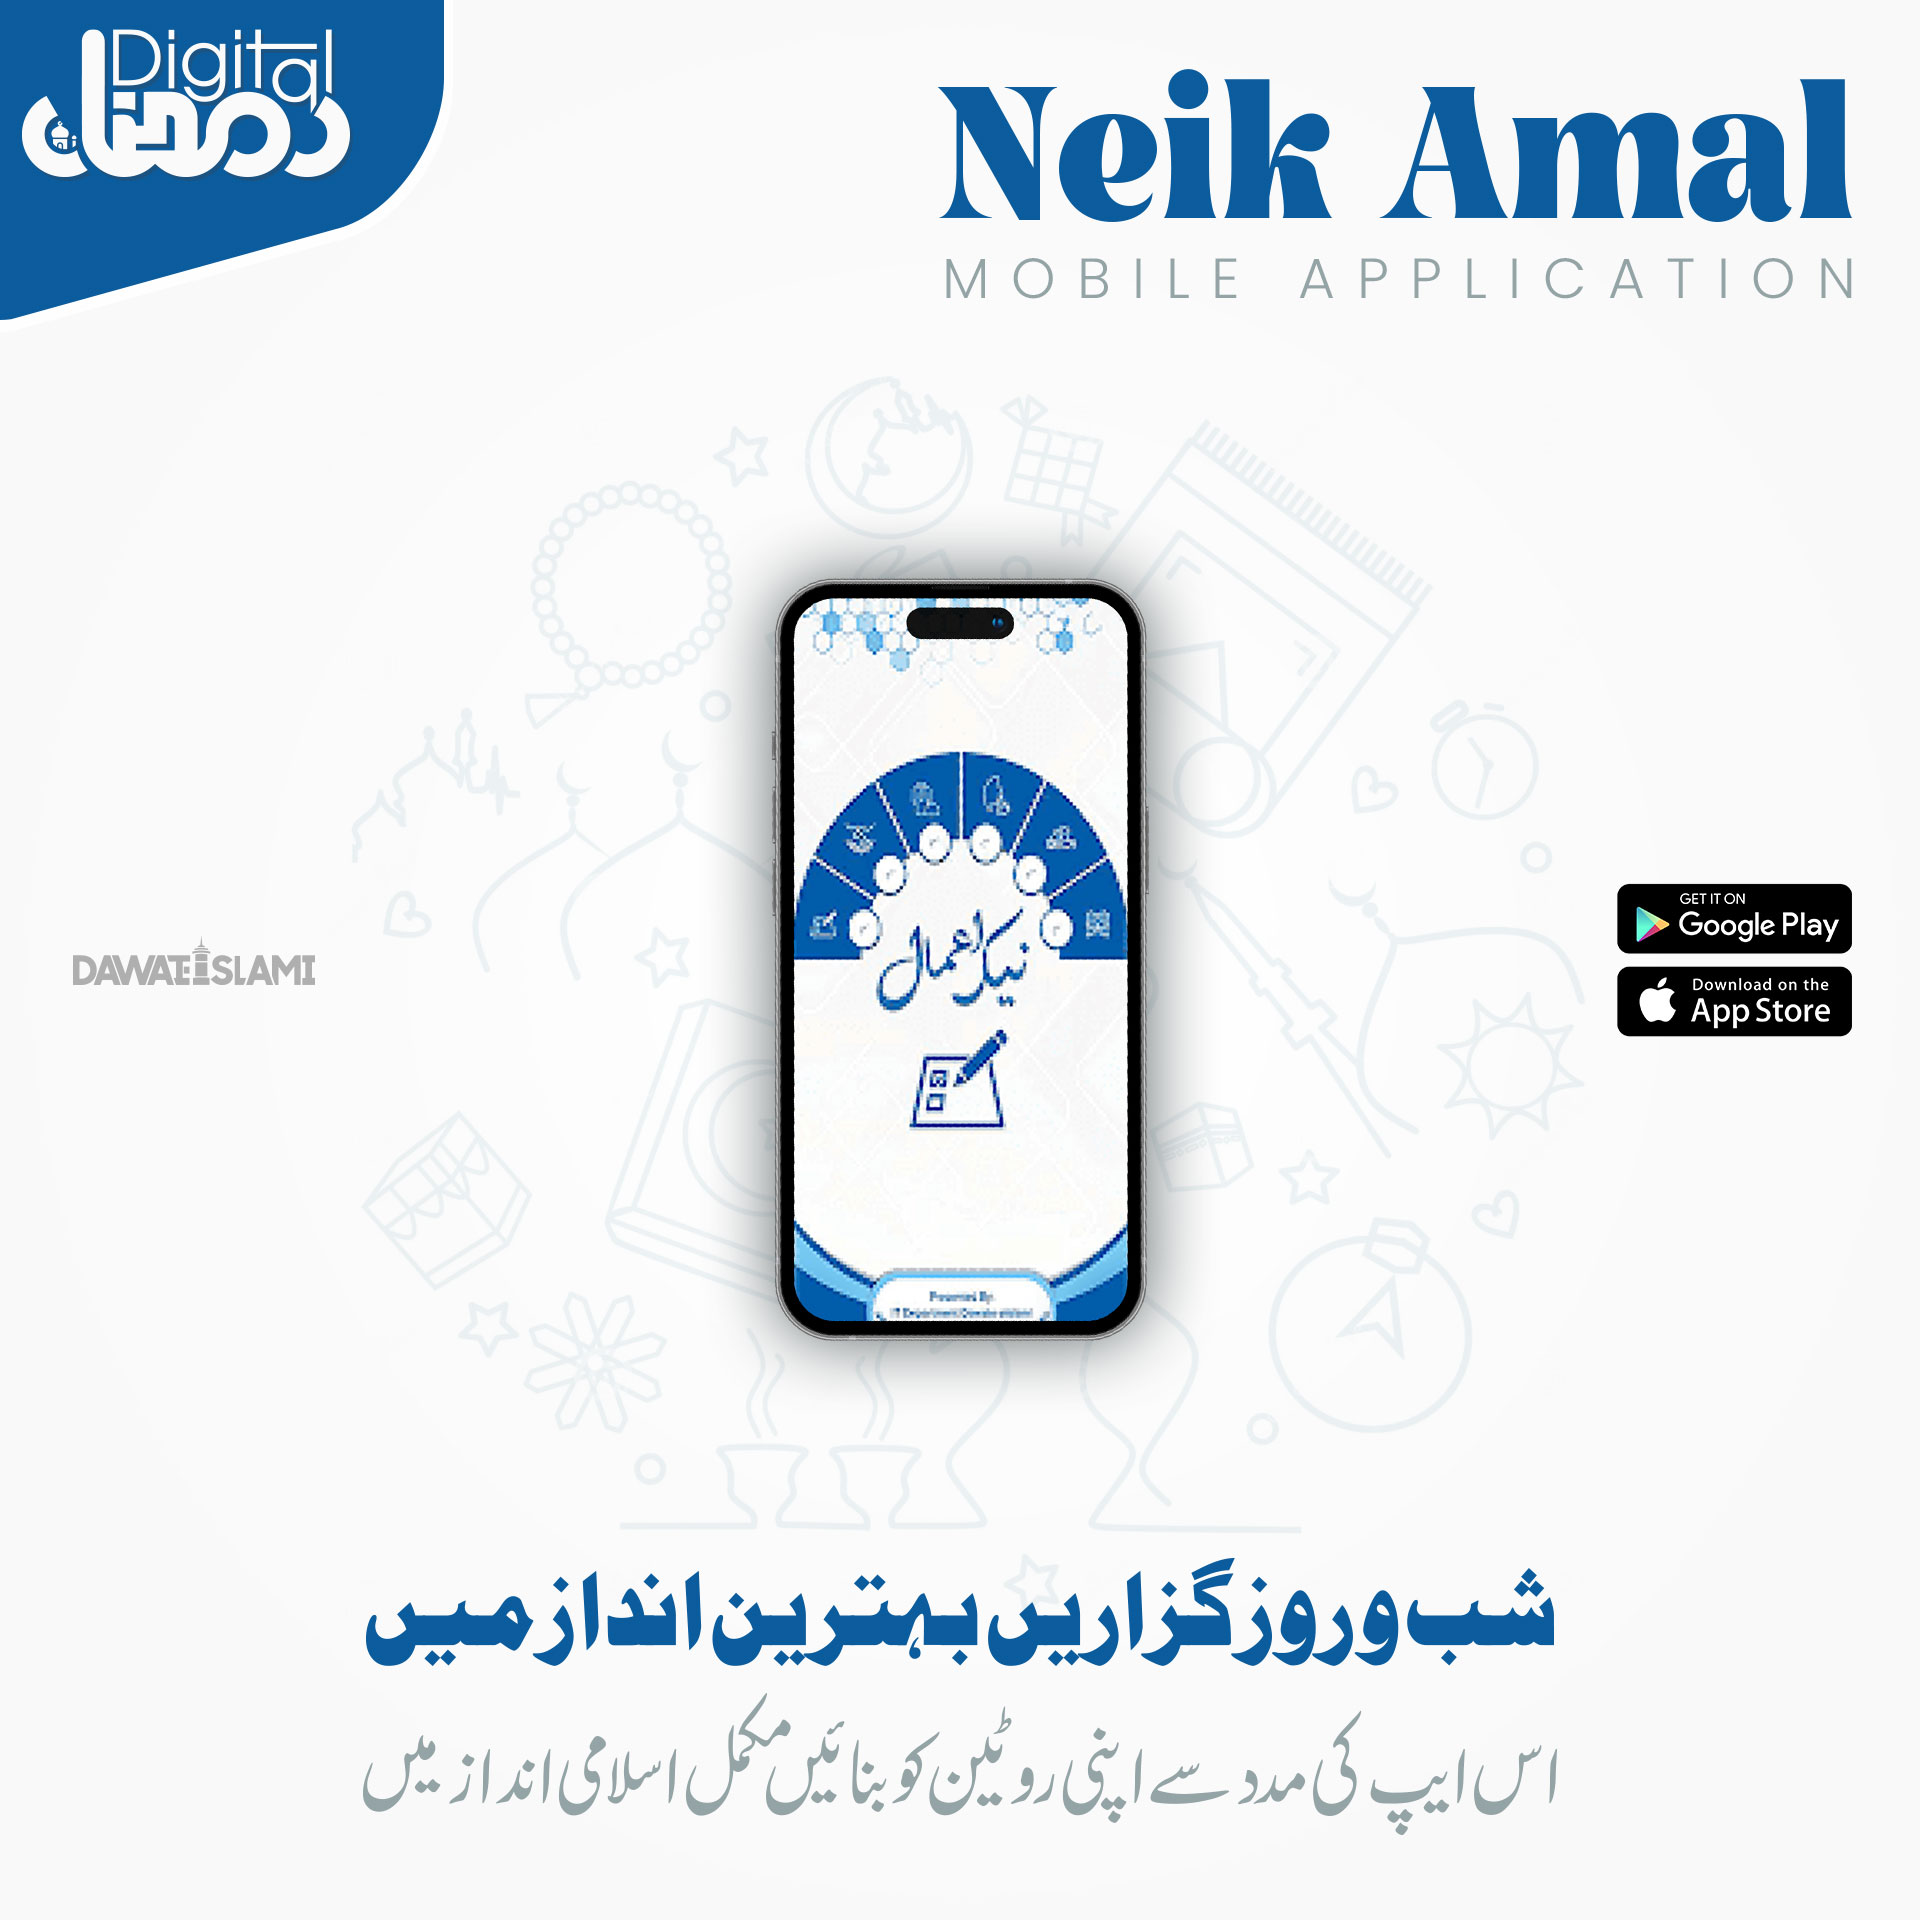 Neik Amal Mobile Application